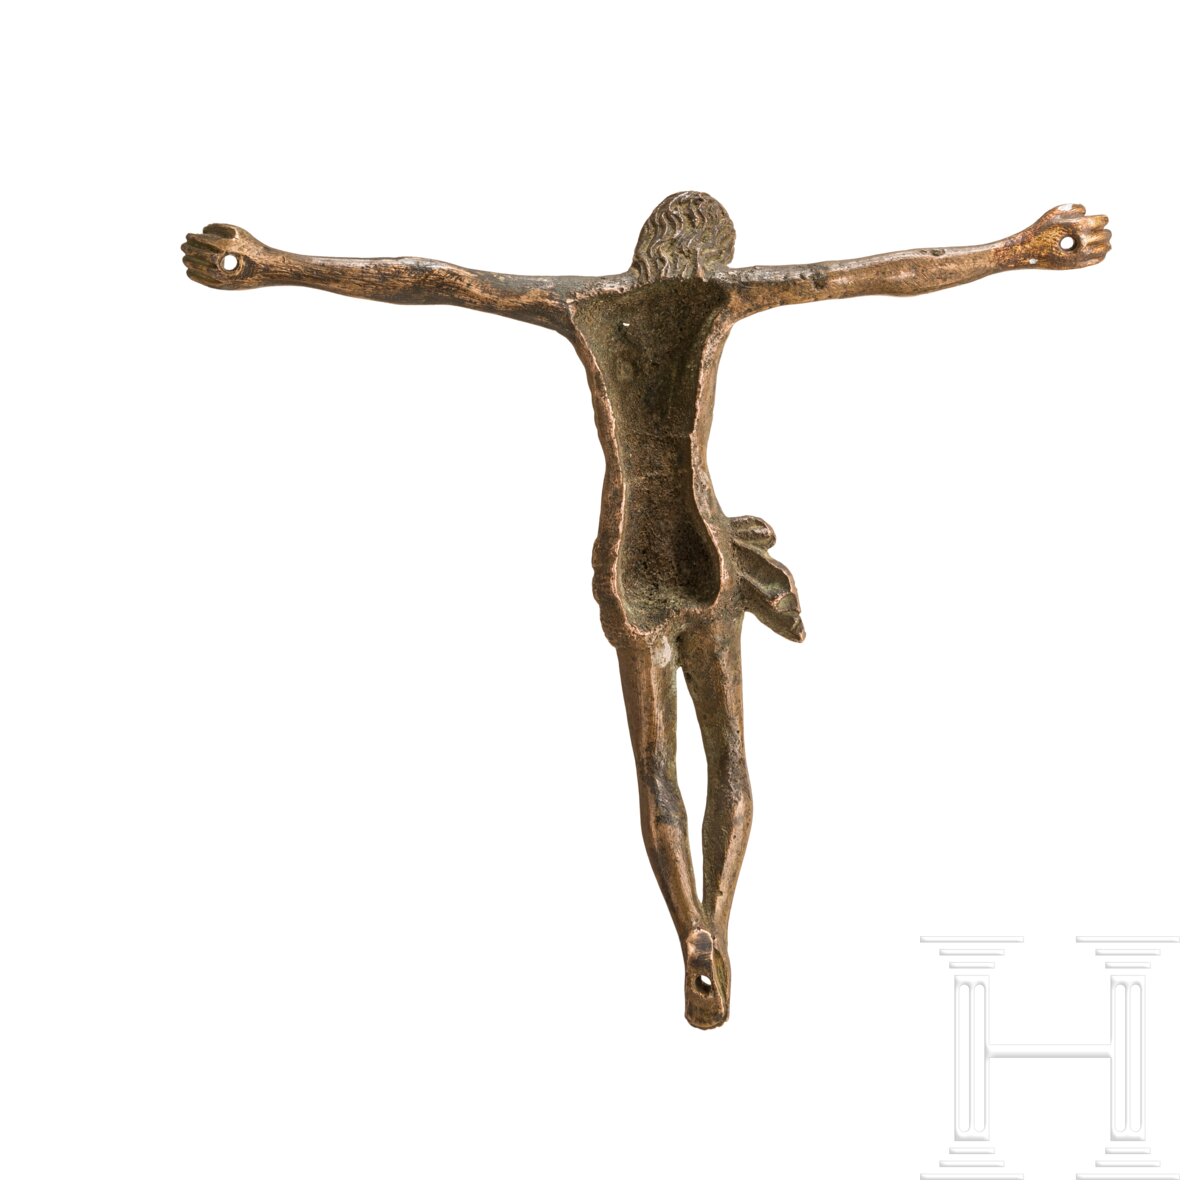 Bronzener Corpus Christi, Umkreis Giambologna-Werkstatt, Norditalien, um 1600 - Image 2 of 3